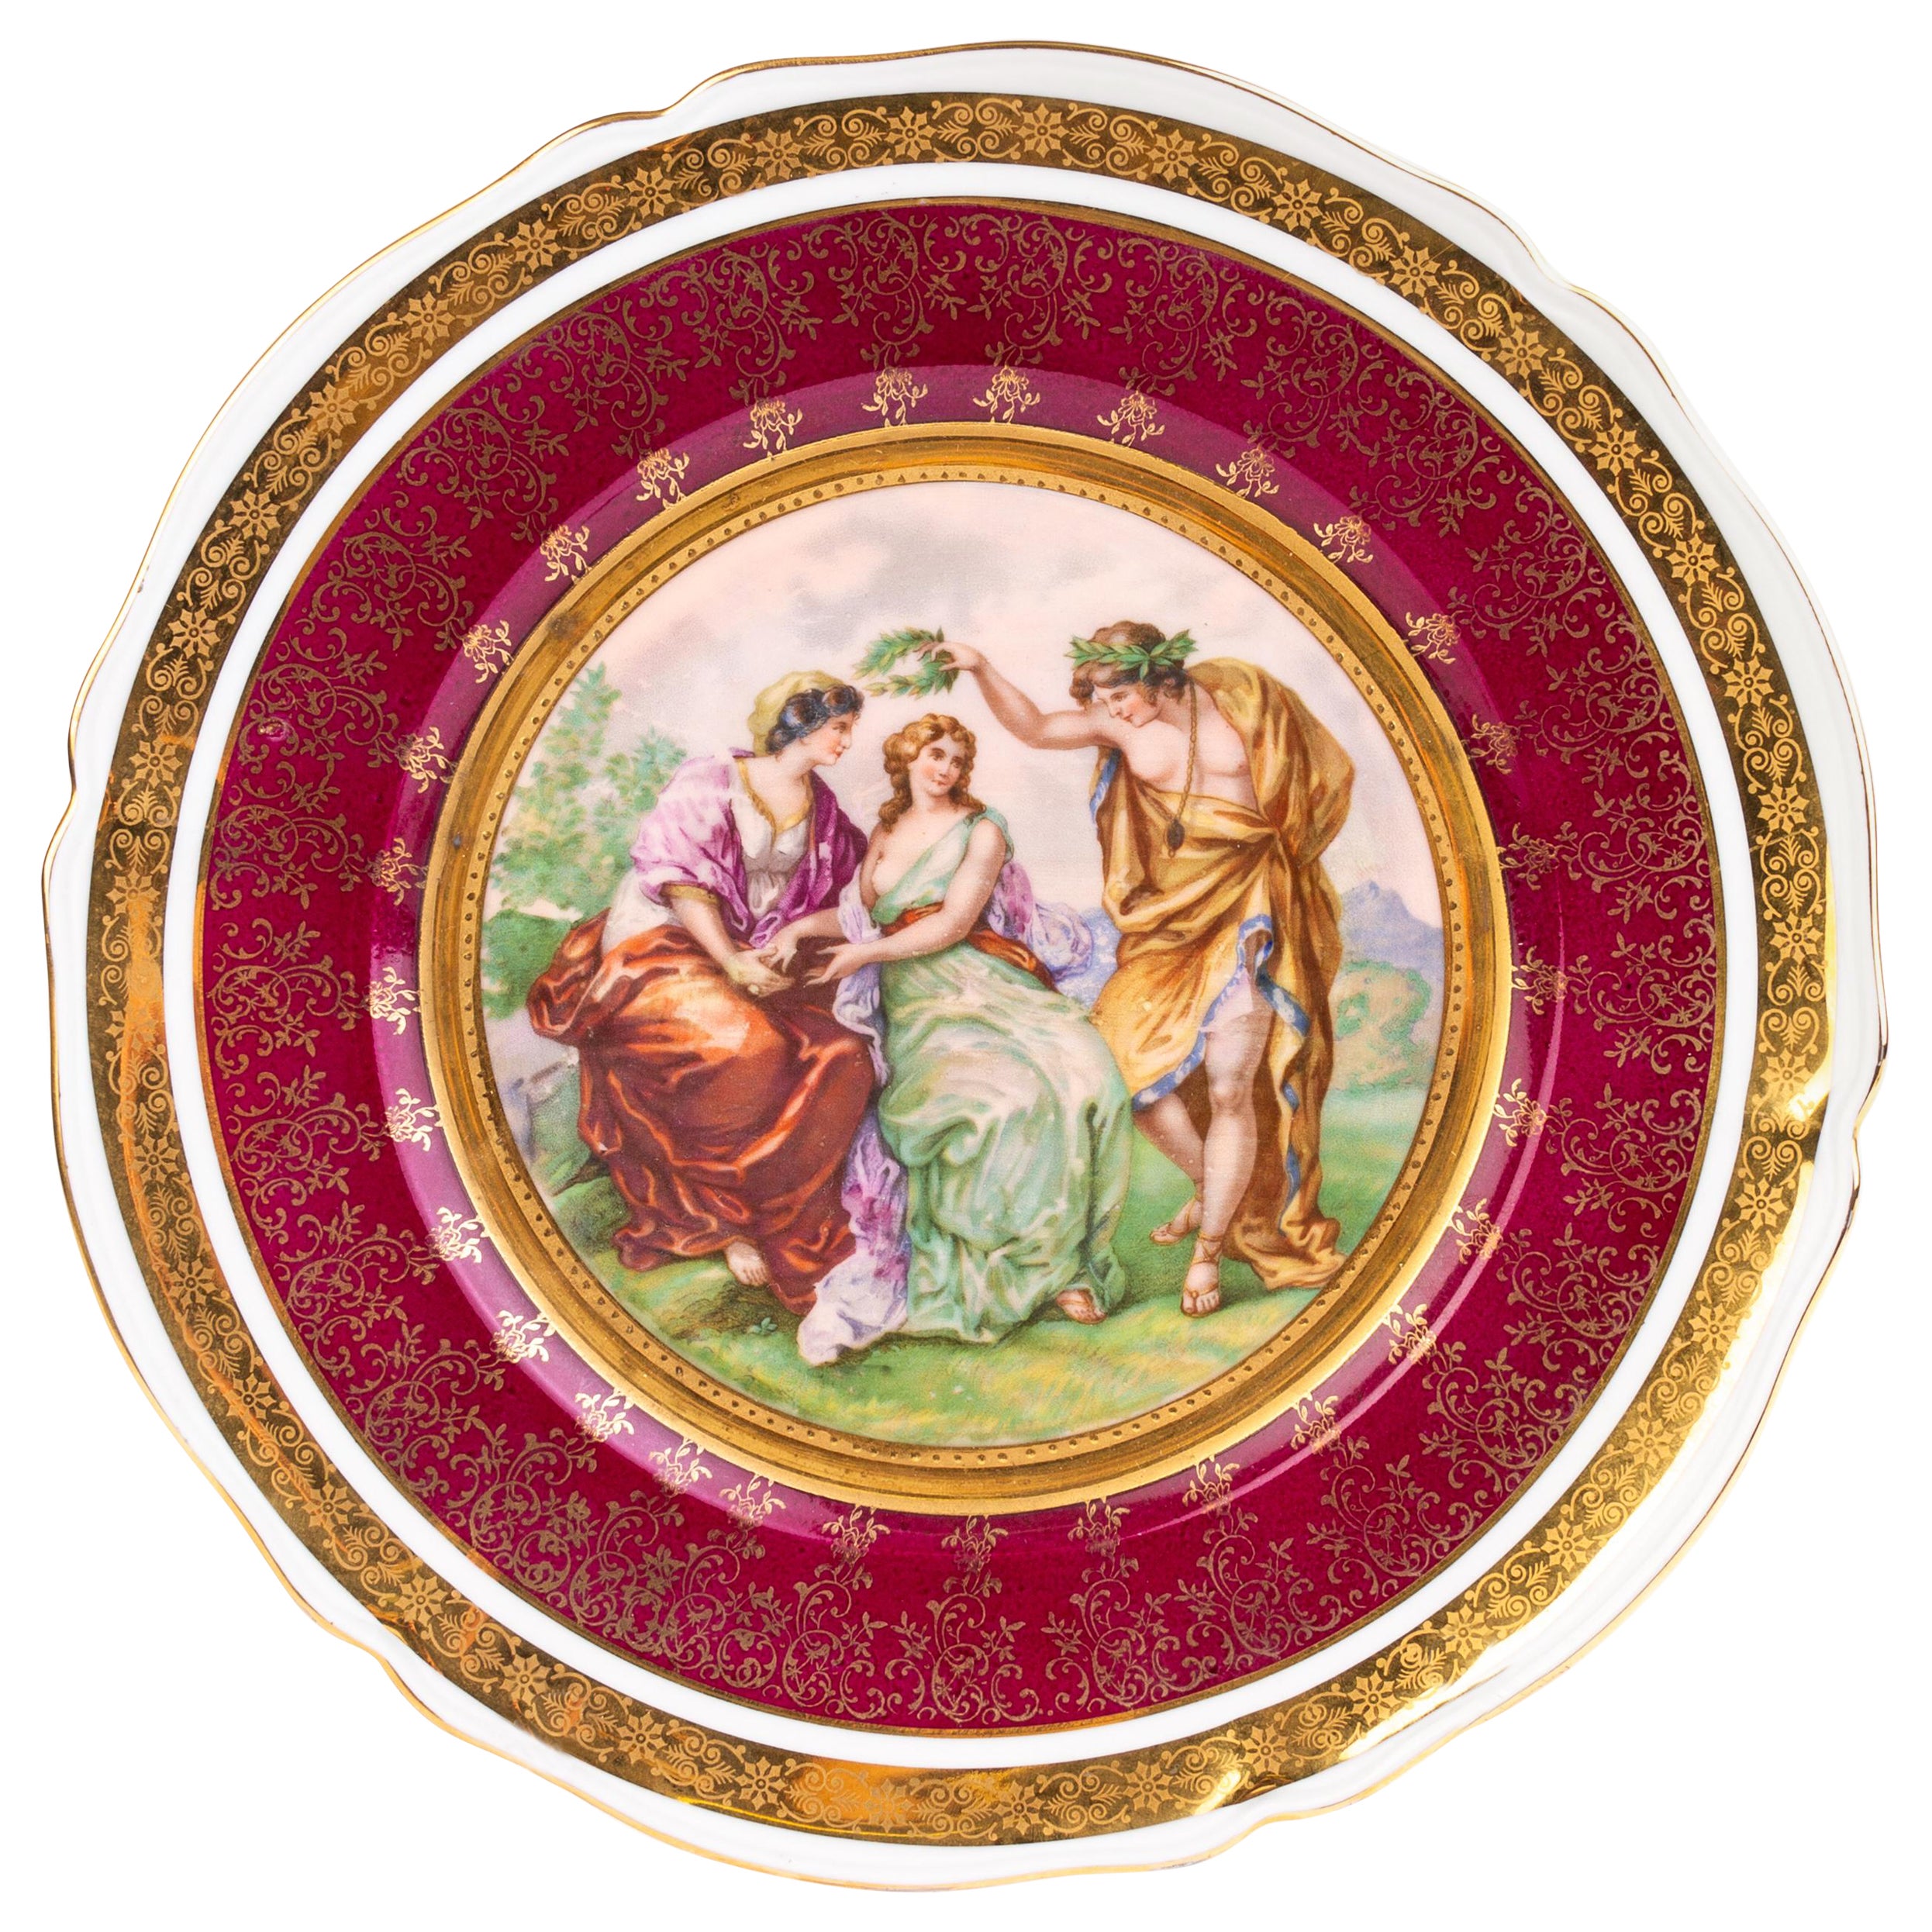 Royal Vienna Fine Porcelain Cabinet Plate 